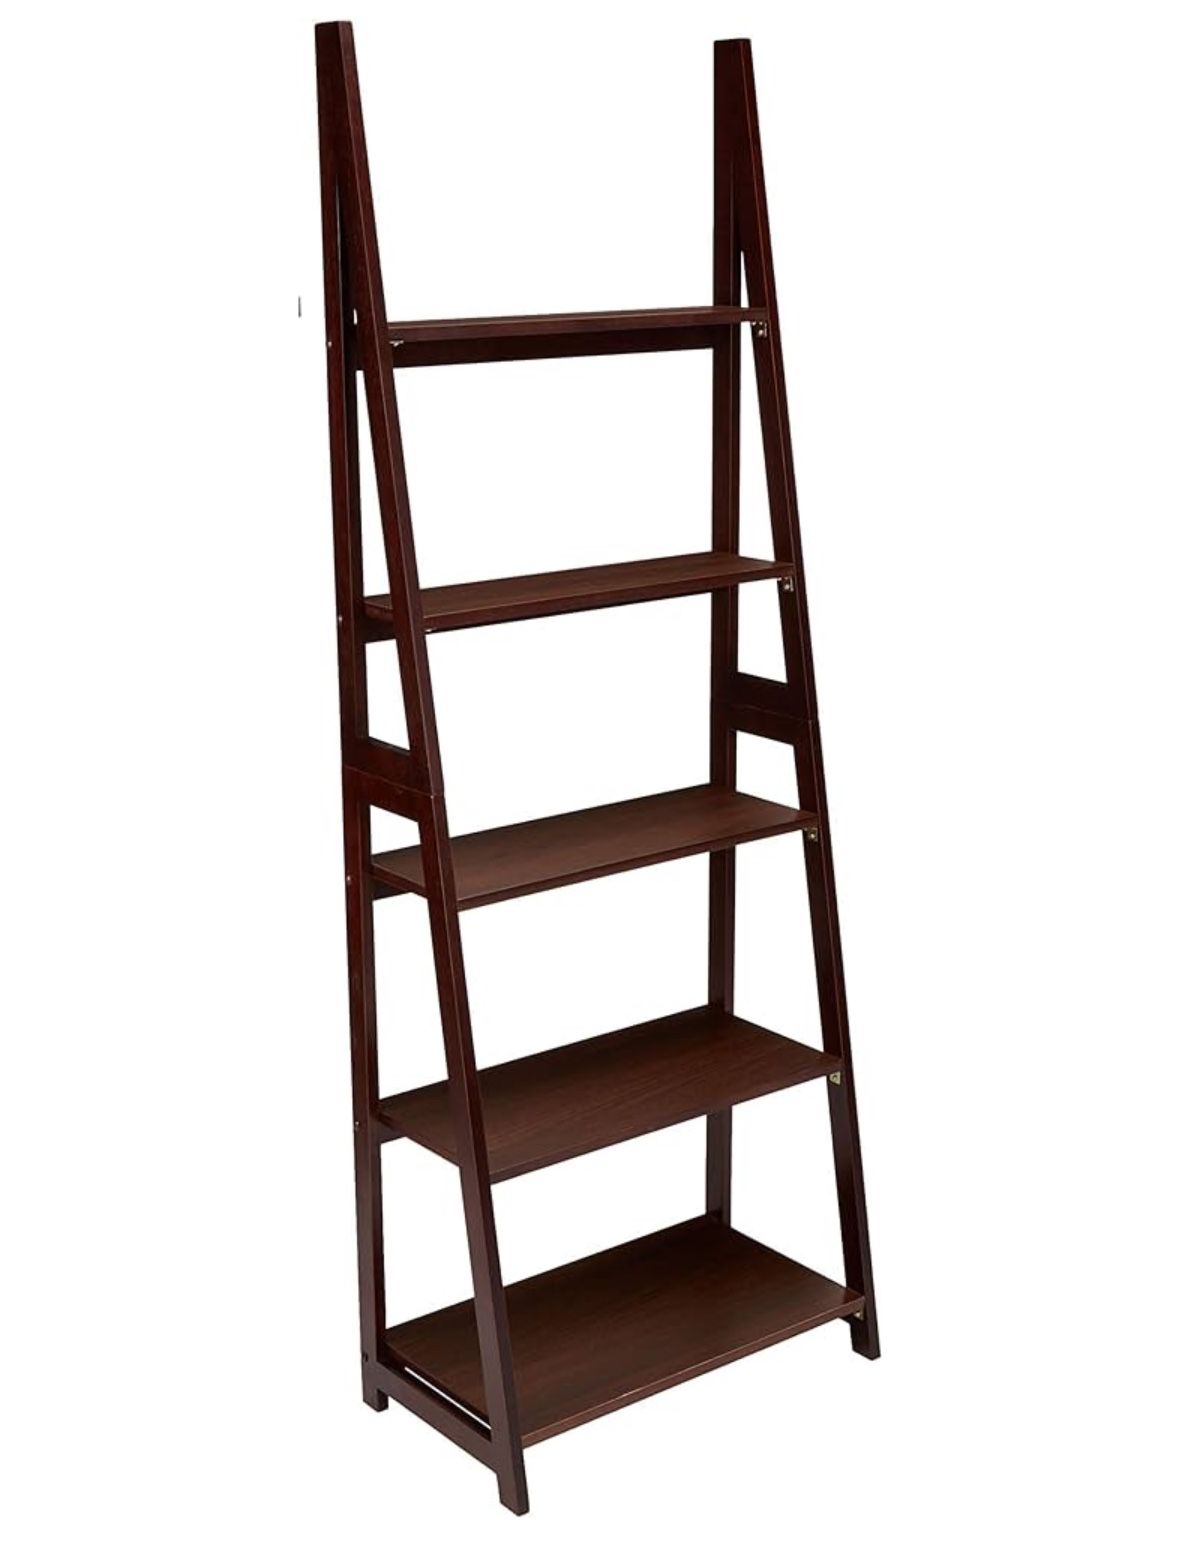 Amazon Basics Modern 5-Tier Ladder Bookshelf 